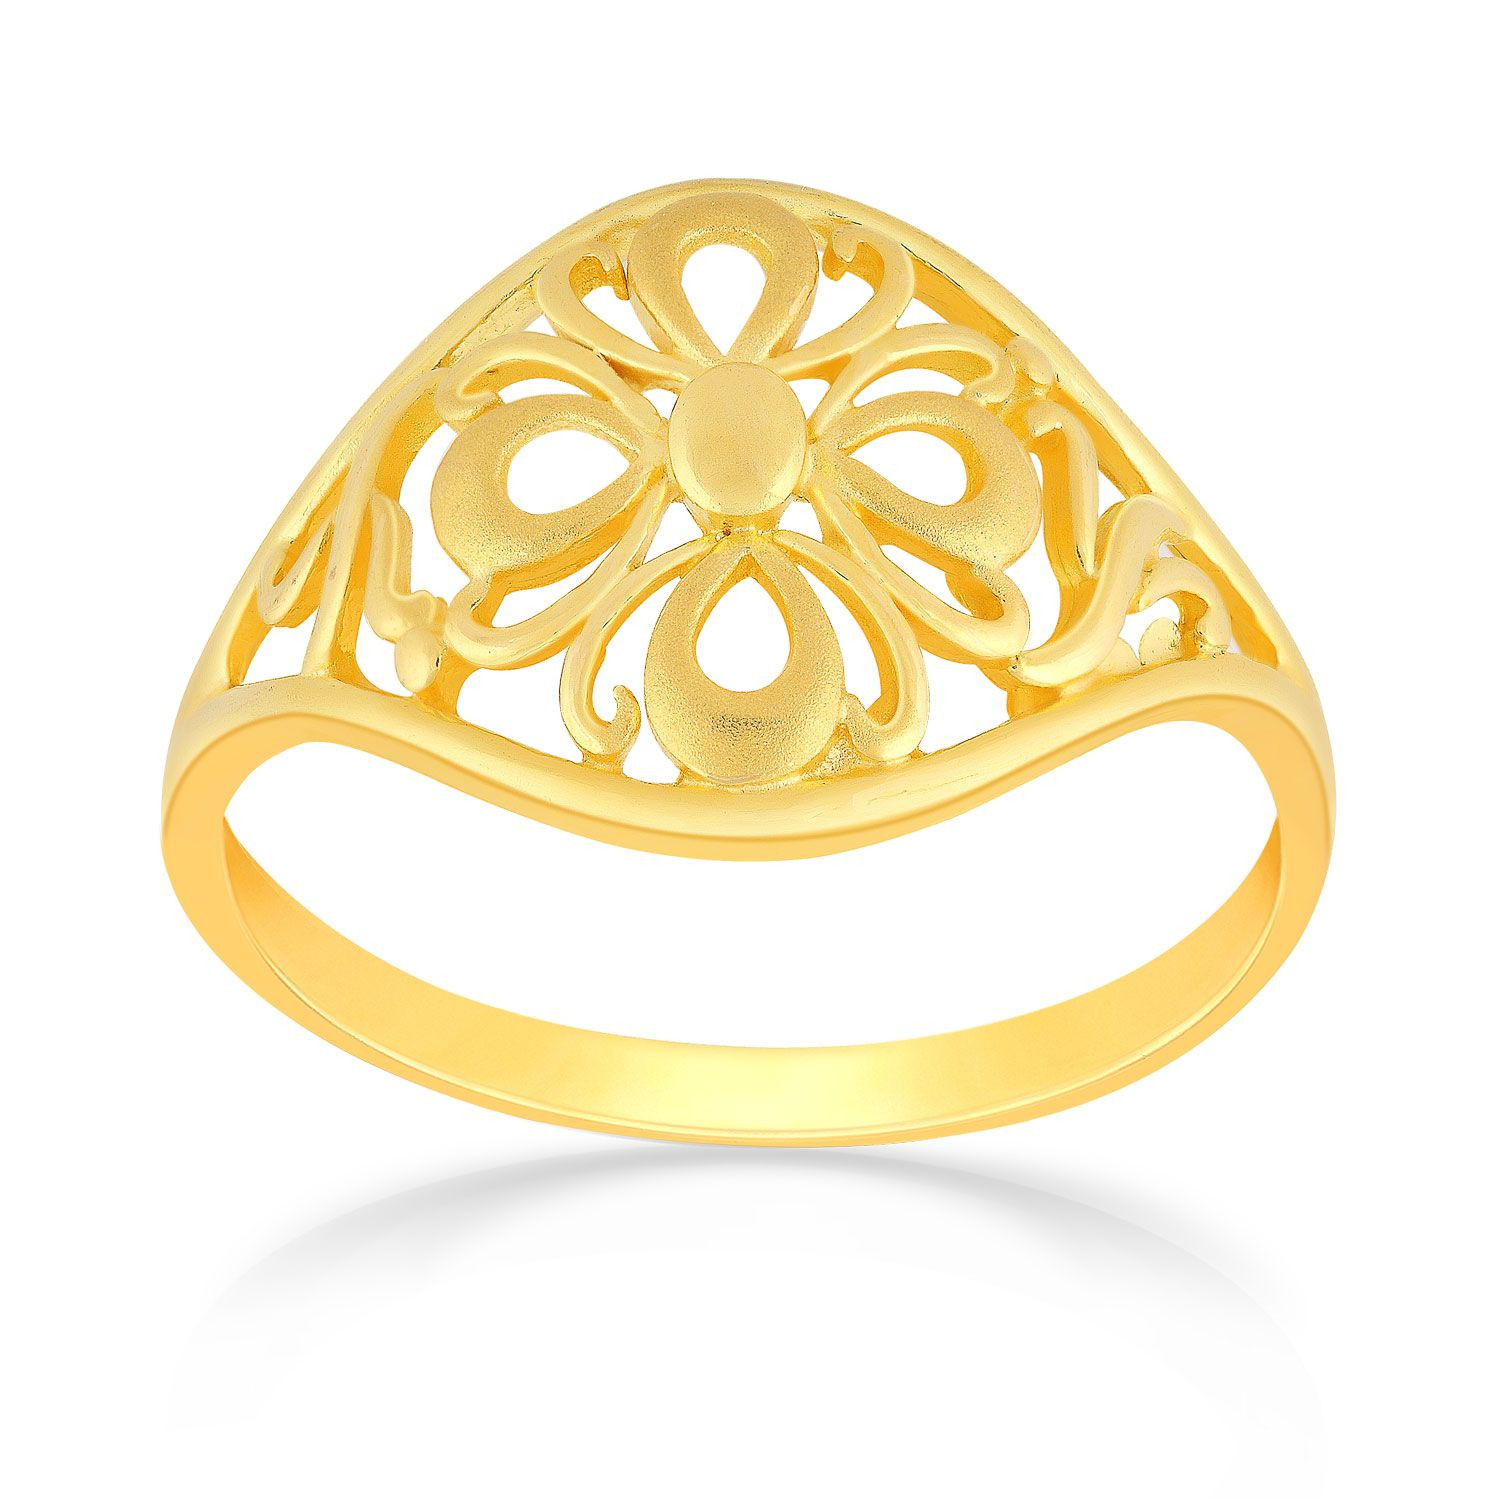 Malabar 22 KT Gold Studded Broad Ring FRNOSKY551